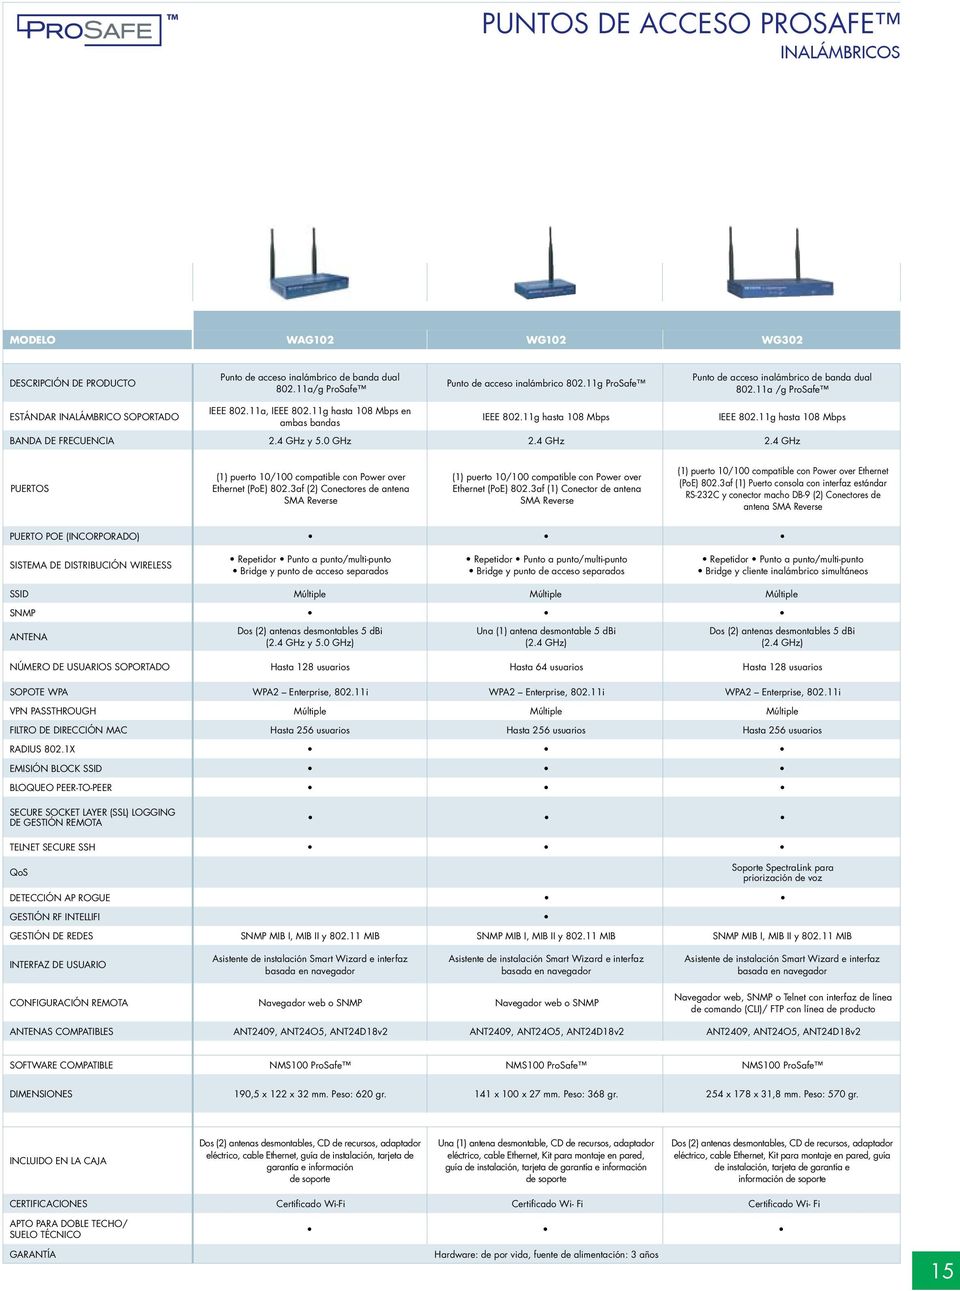 11g hasta 108 Mbps BANDA DE FRECUENCIA 2.4 GHz y 5.0 GHz 2.4 GHz 2.4 GHz PUERTOS (1) puerto 10/100 compatible con Power over Ethernet (PoE) 802.